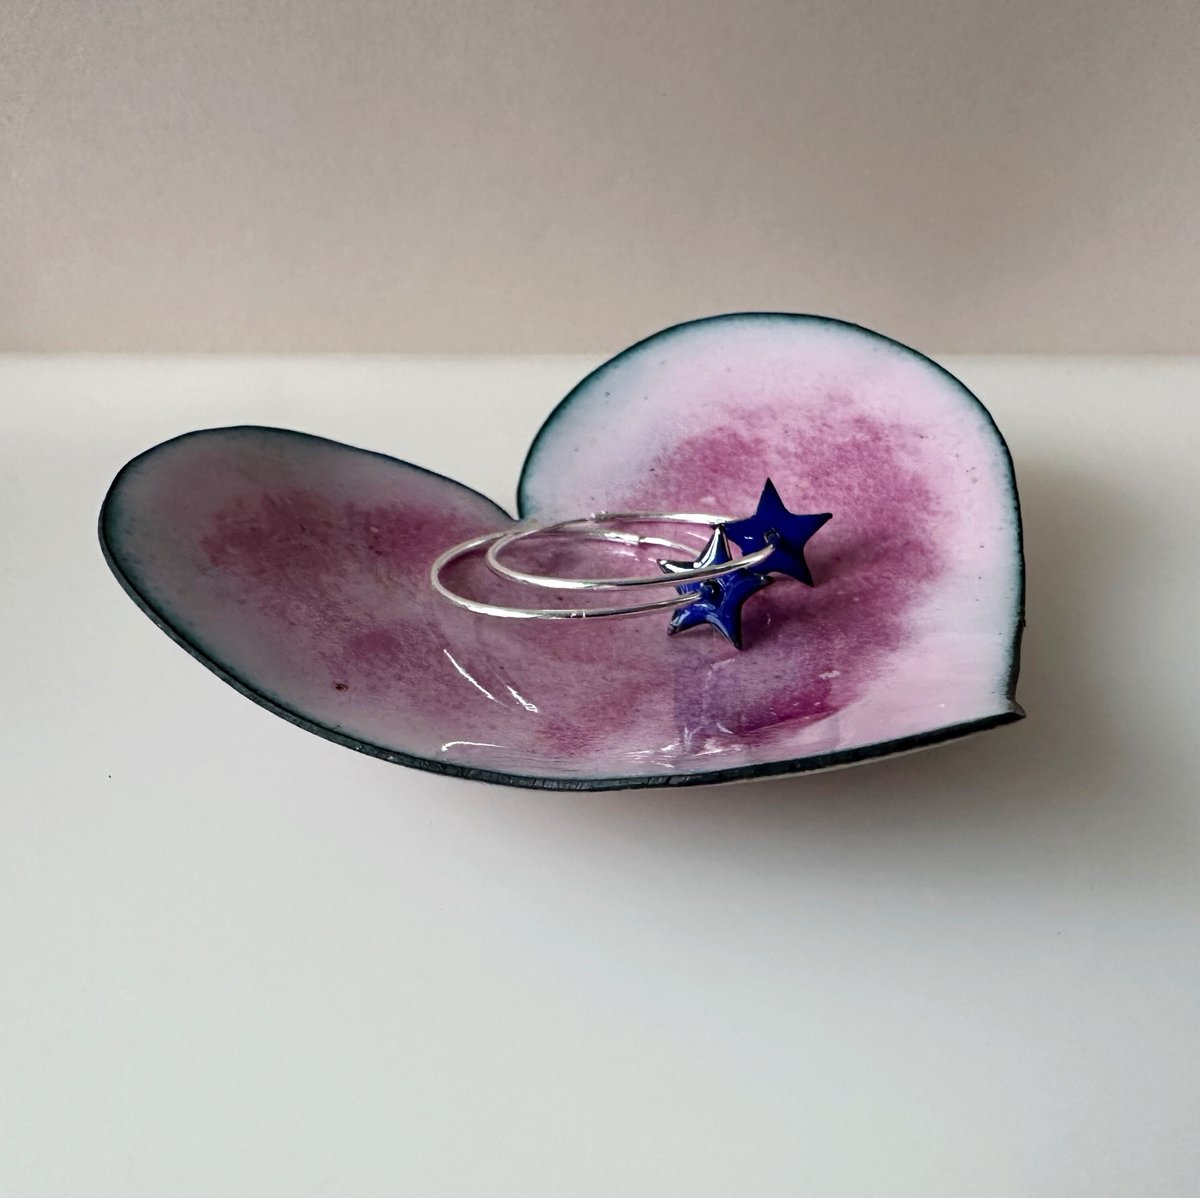 Pink Heart Enamel Ring Dish - Valentine Gift - Tealight Holder tuppu.net/310ba7c1 #ShopIndie #MHHSBD #UKCraftersHour #MyNewTag #AnniversaryGift